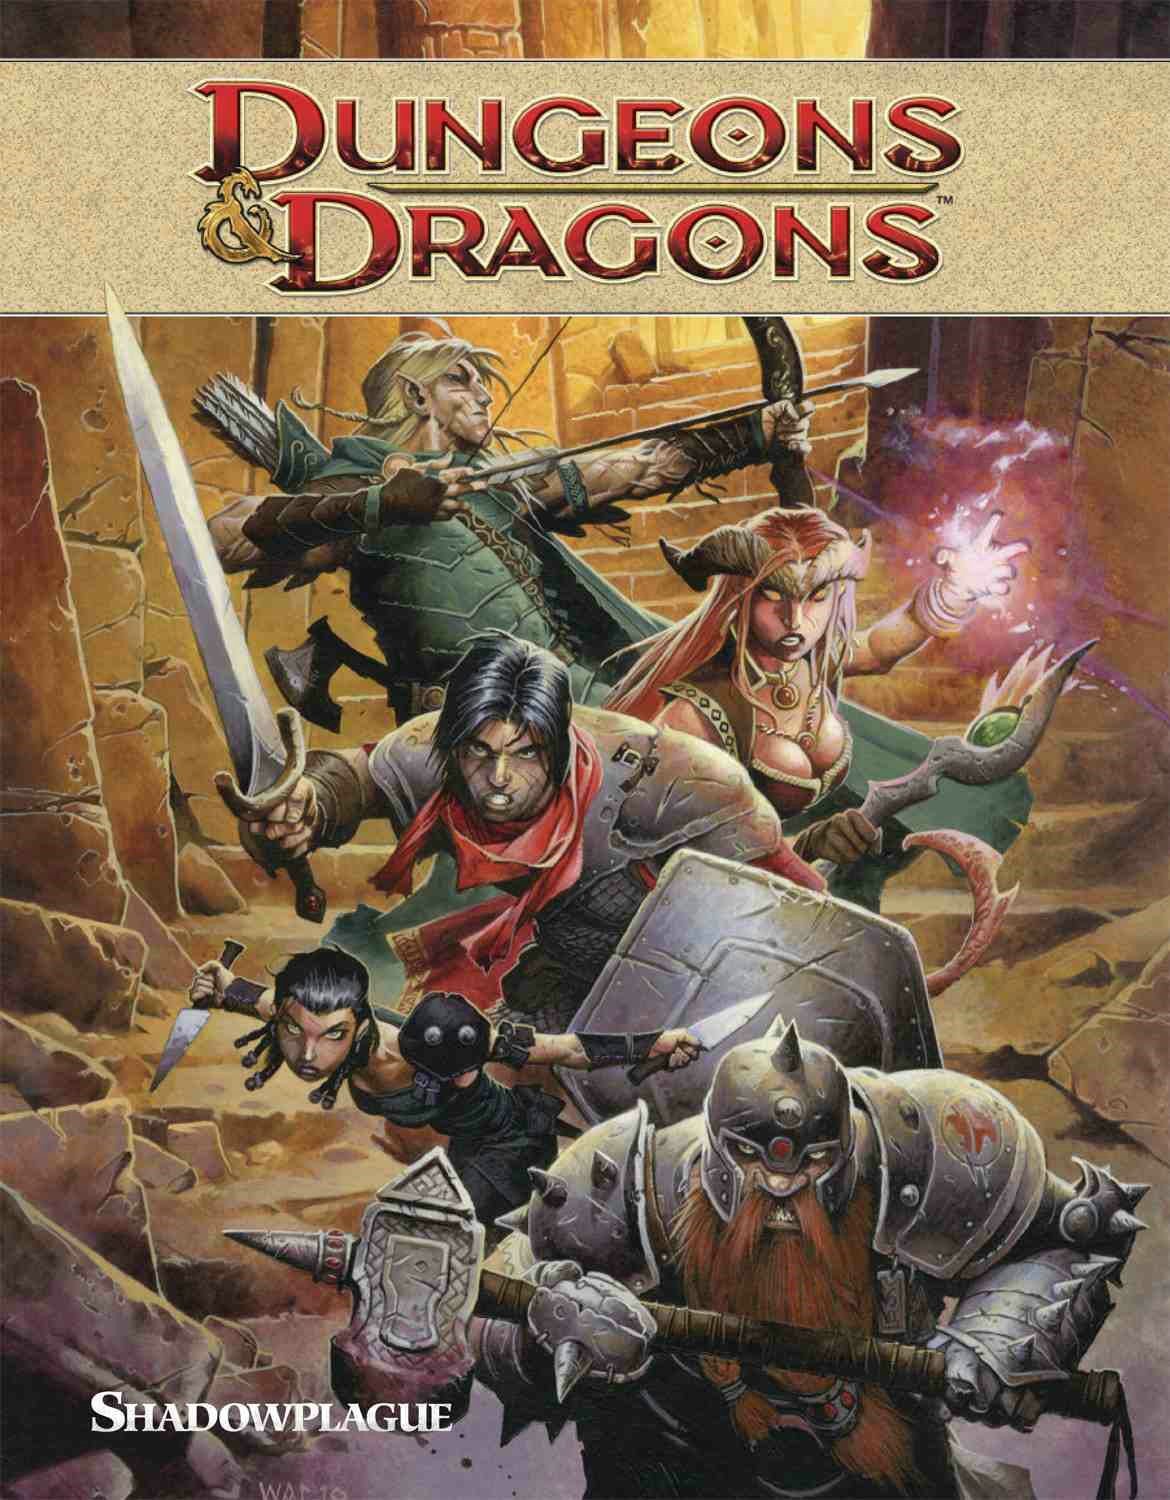 Dungeons & Dragons Hardcover Volume 1 Shadowplague